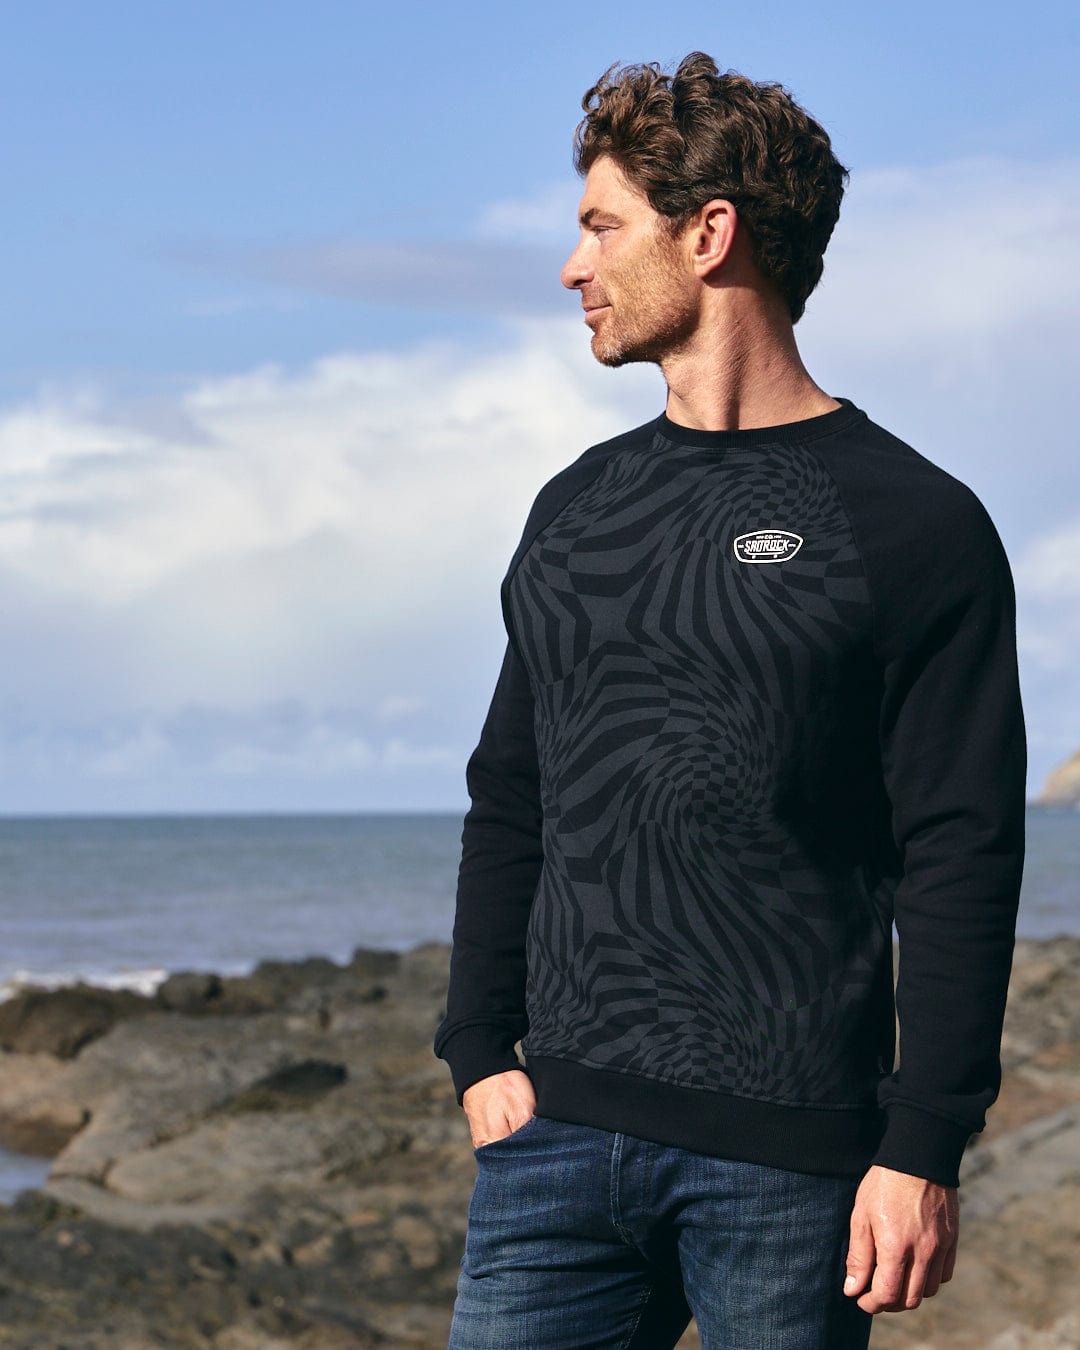 A man wearing a Grip It - Mens Crew Neck Sweat - Black sweatshirt with geometric print stands on a rocky beach, showcasing the Saltrock branding.